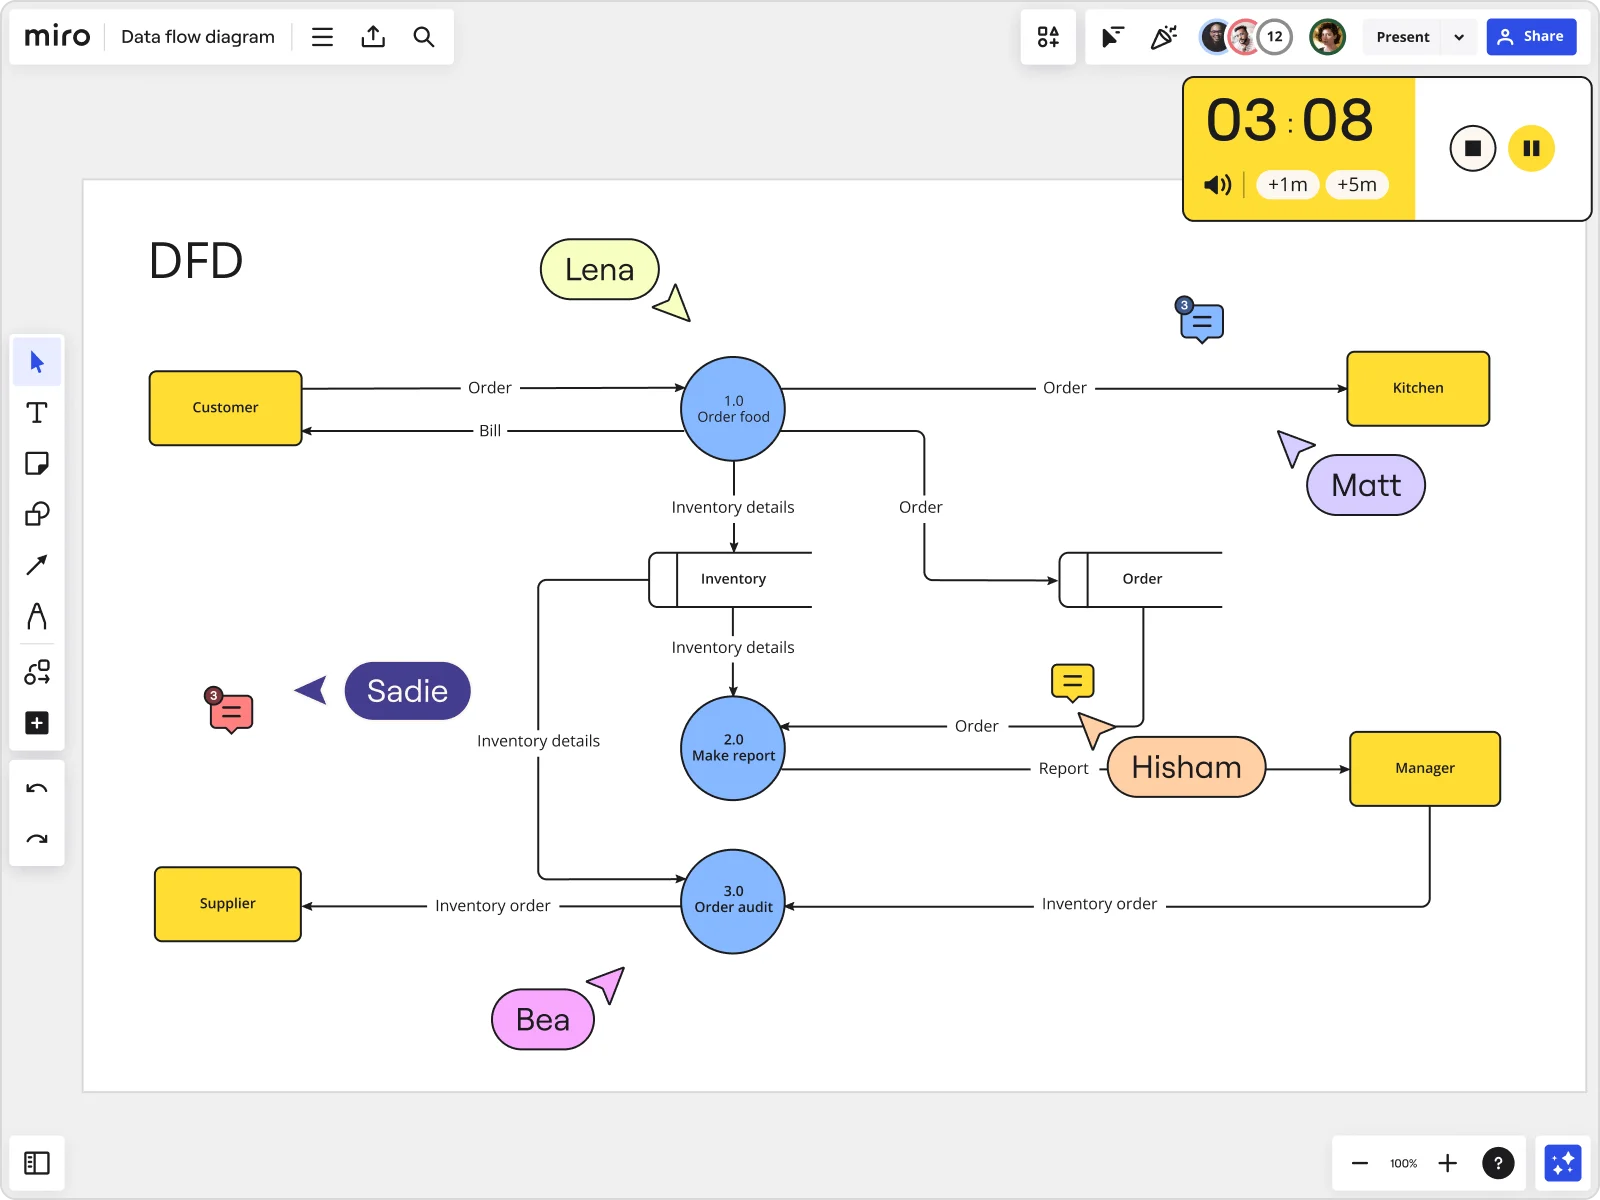 An image of Miro's data flow diagram tool